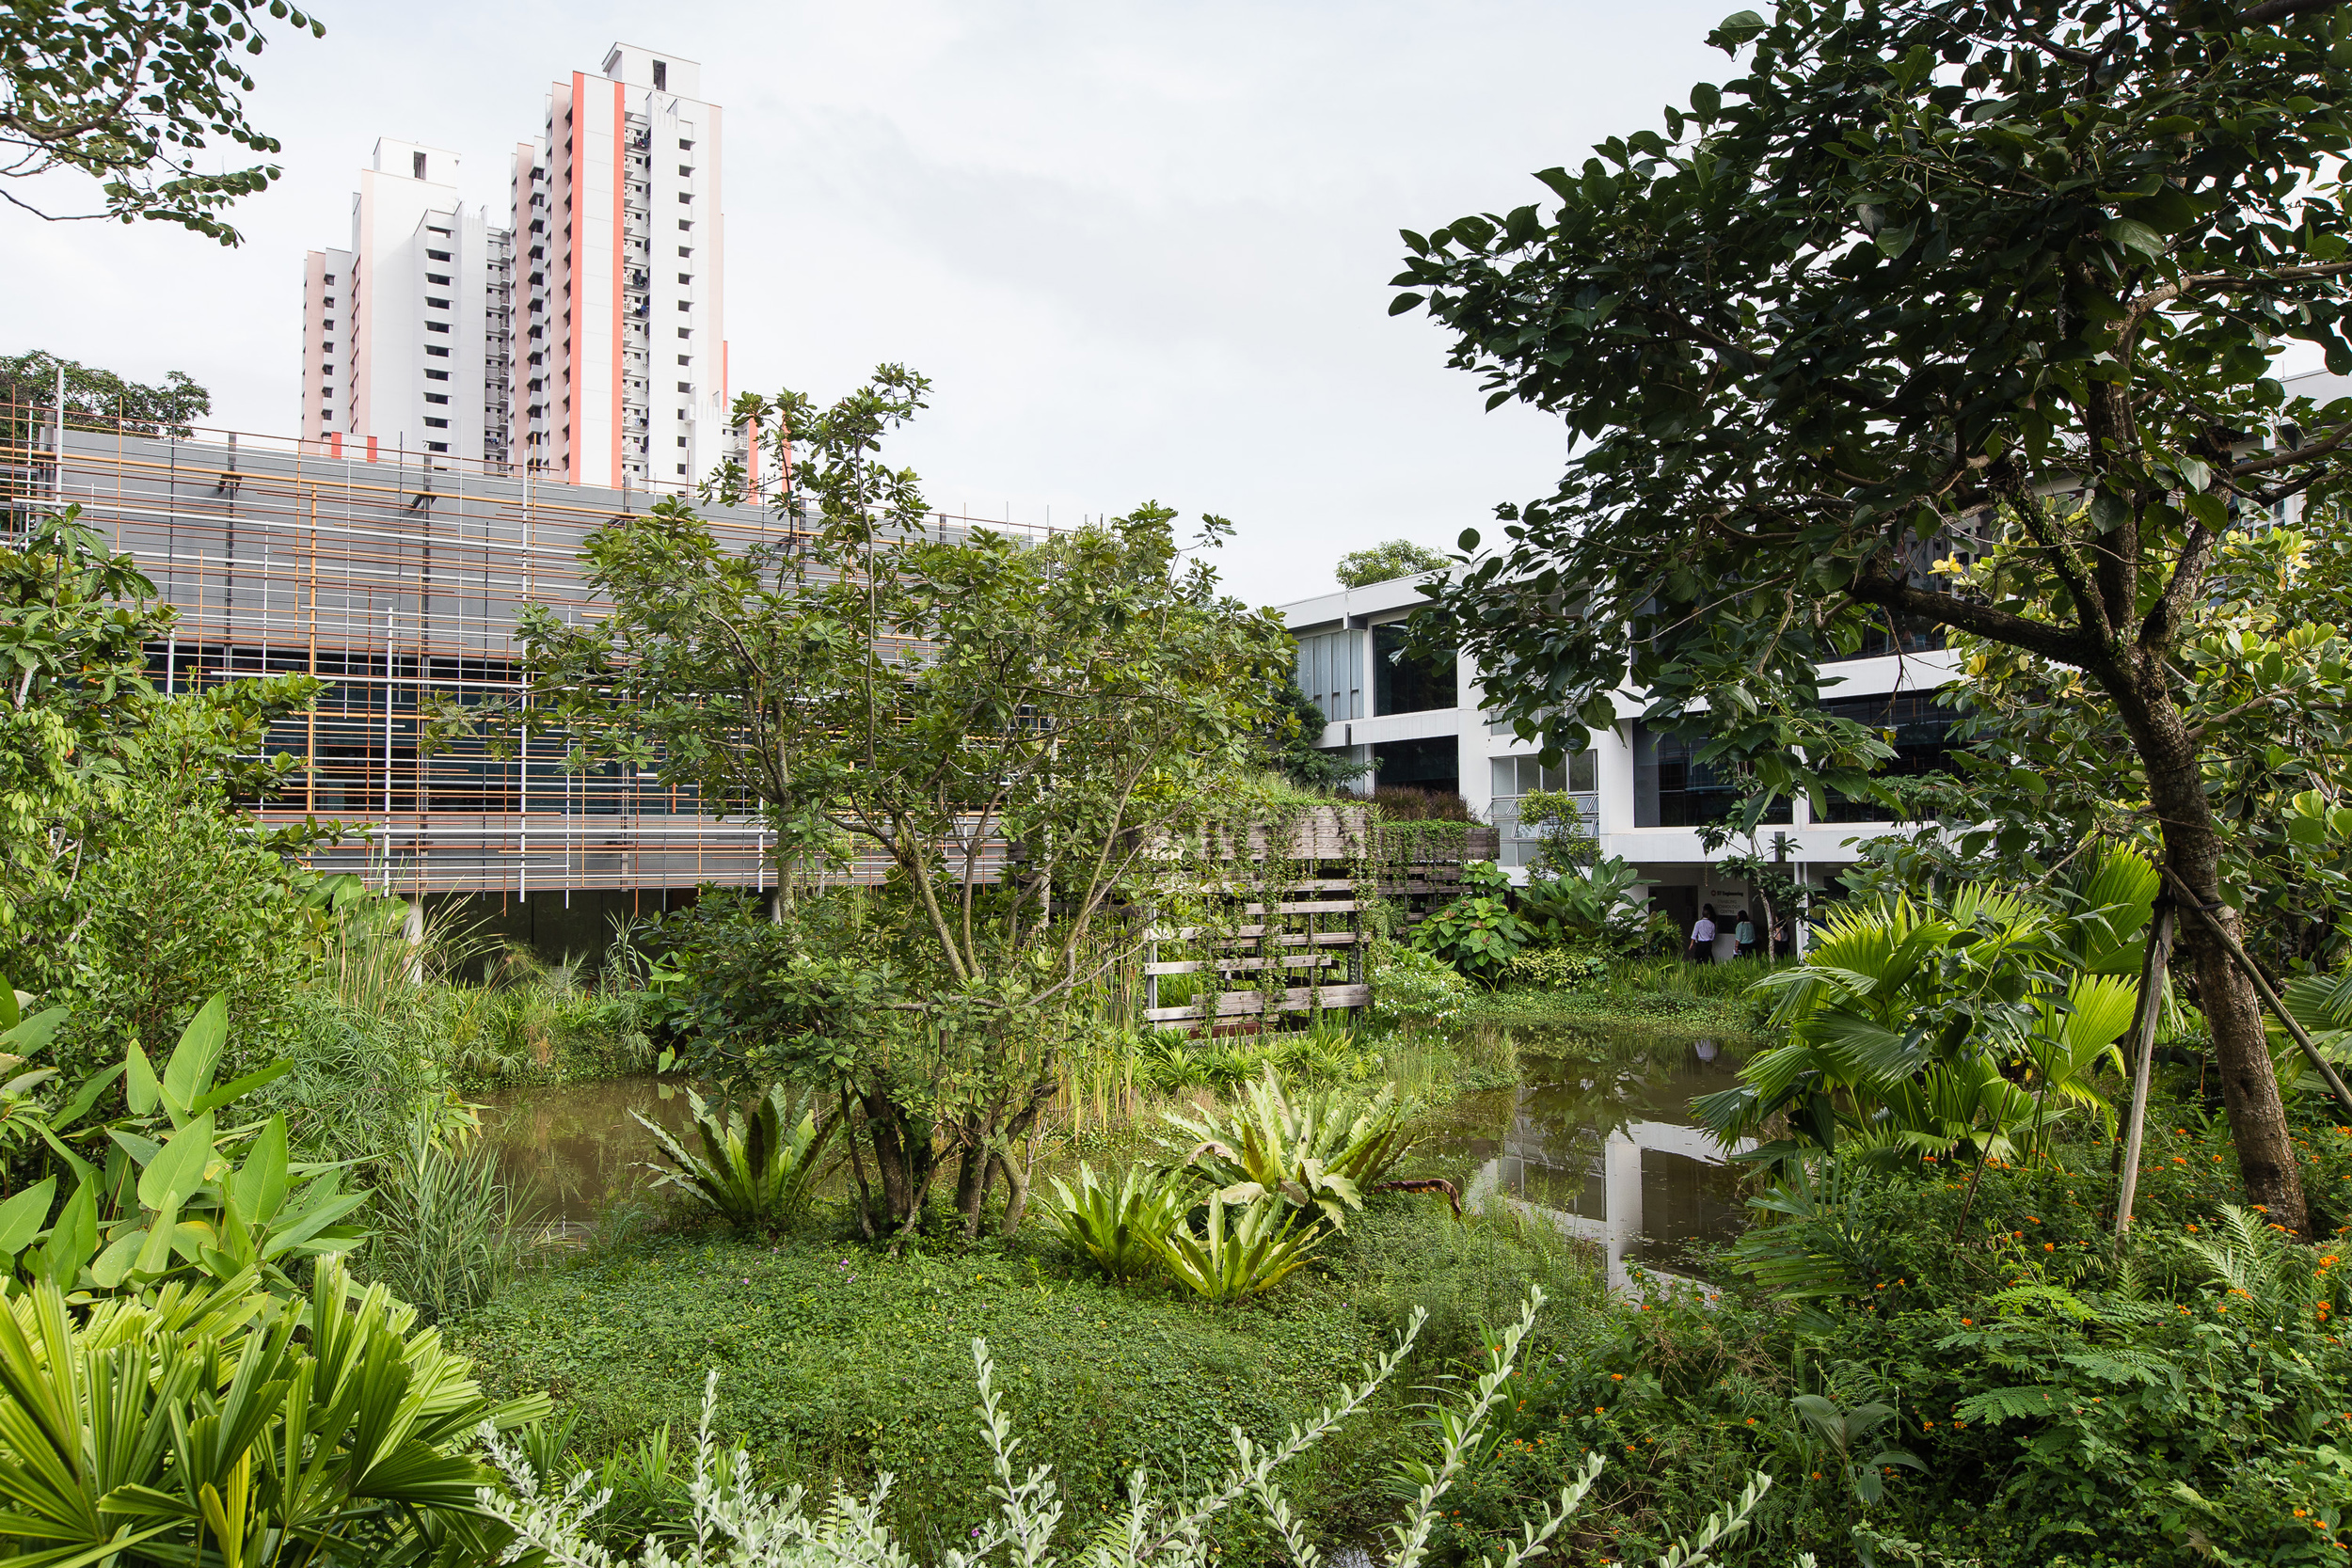 Corporate Photographer in Singapore - President’s Design Award Winners